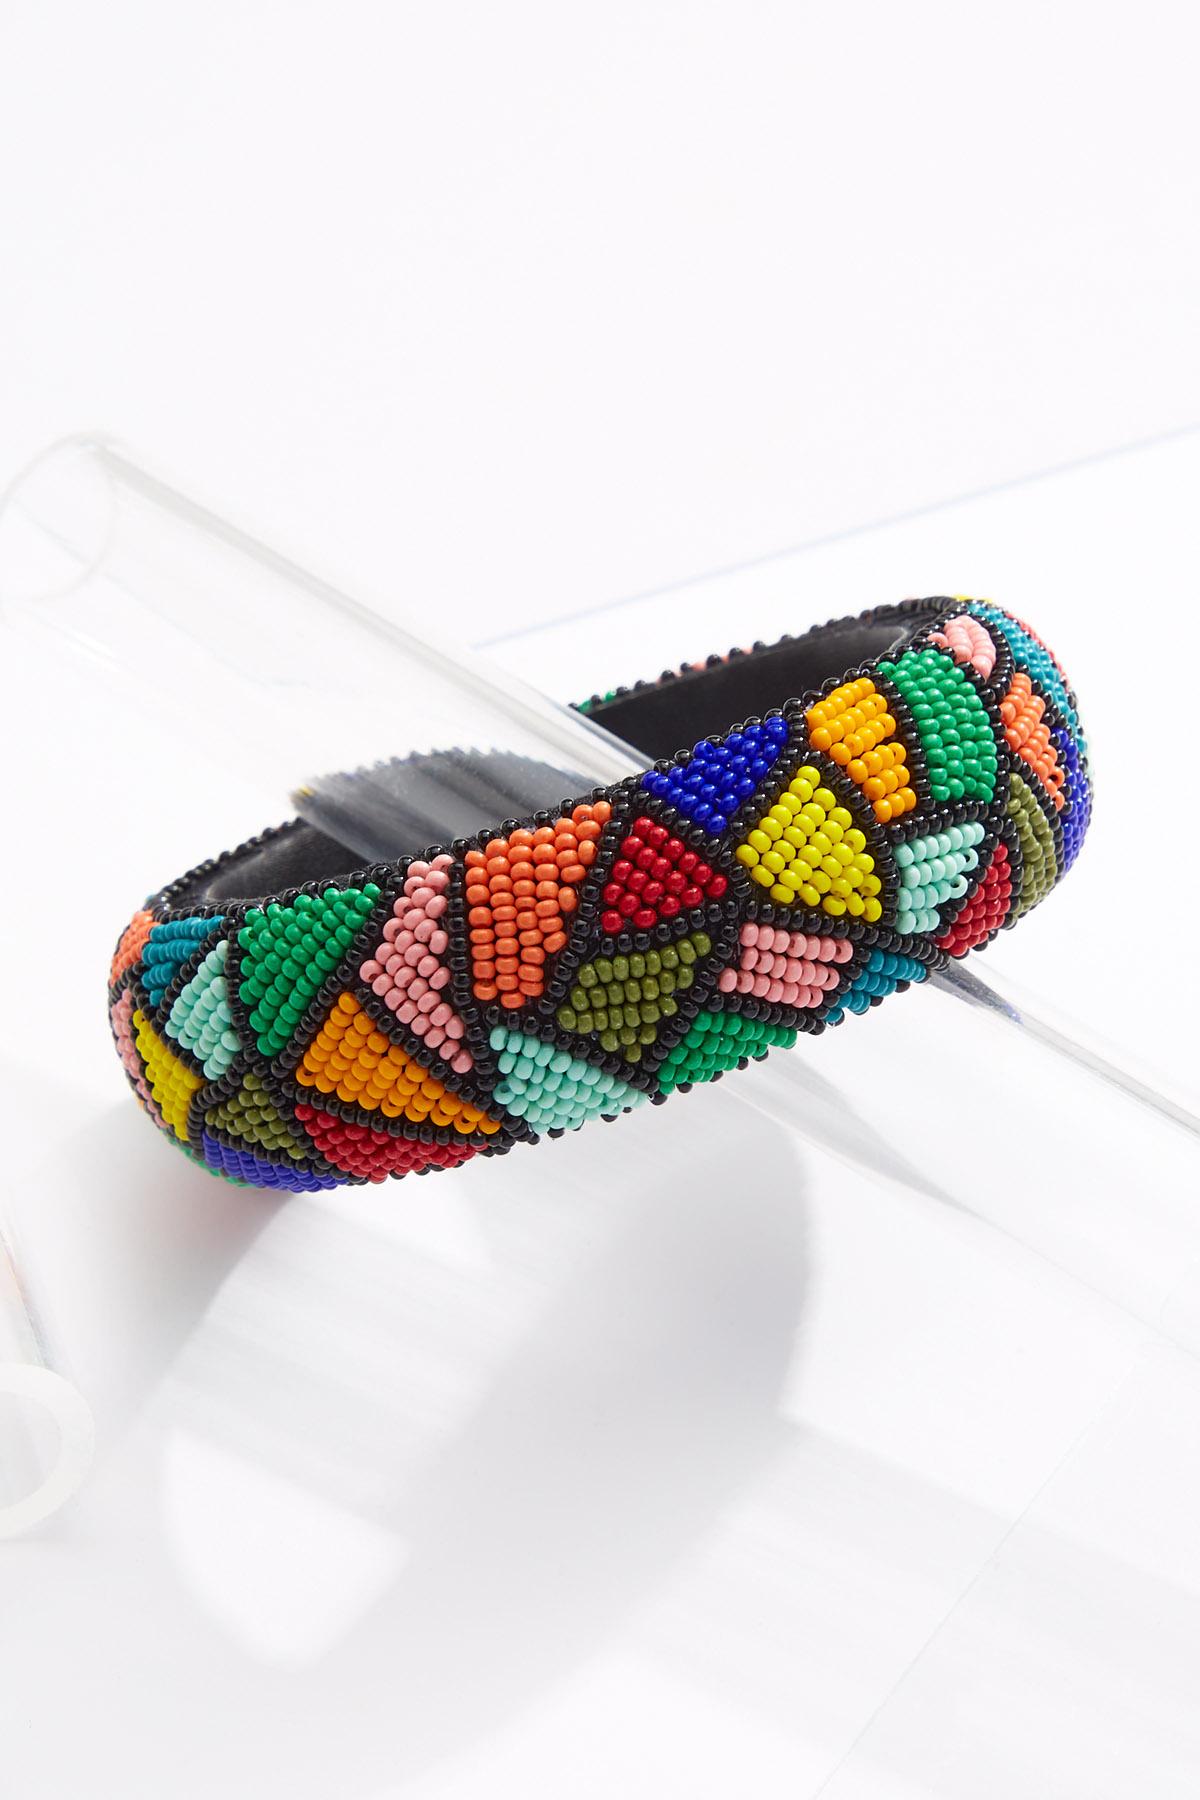 Mosaic Seed Bead Bangle Bracelet